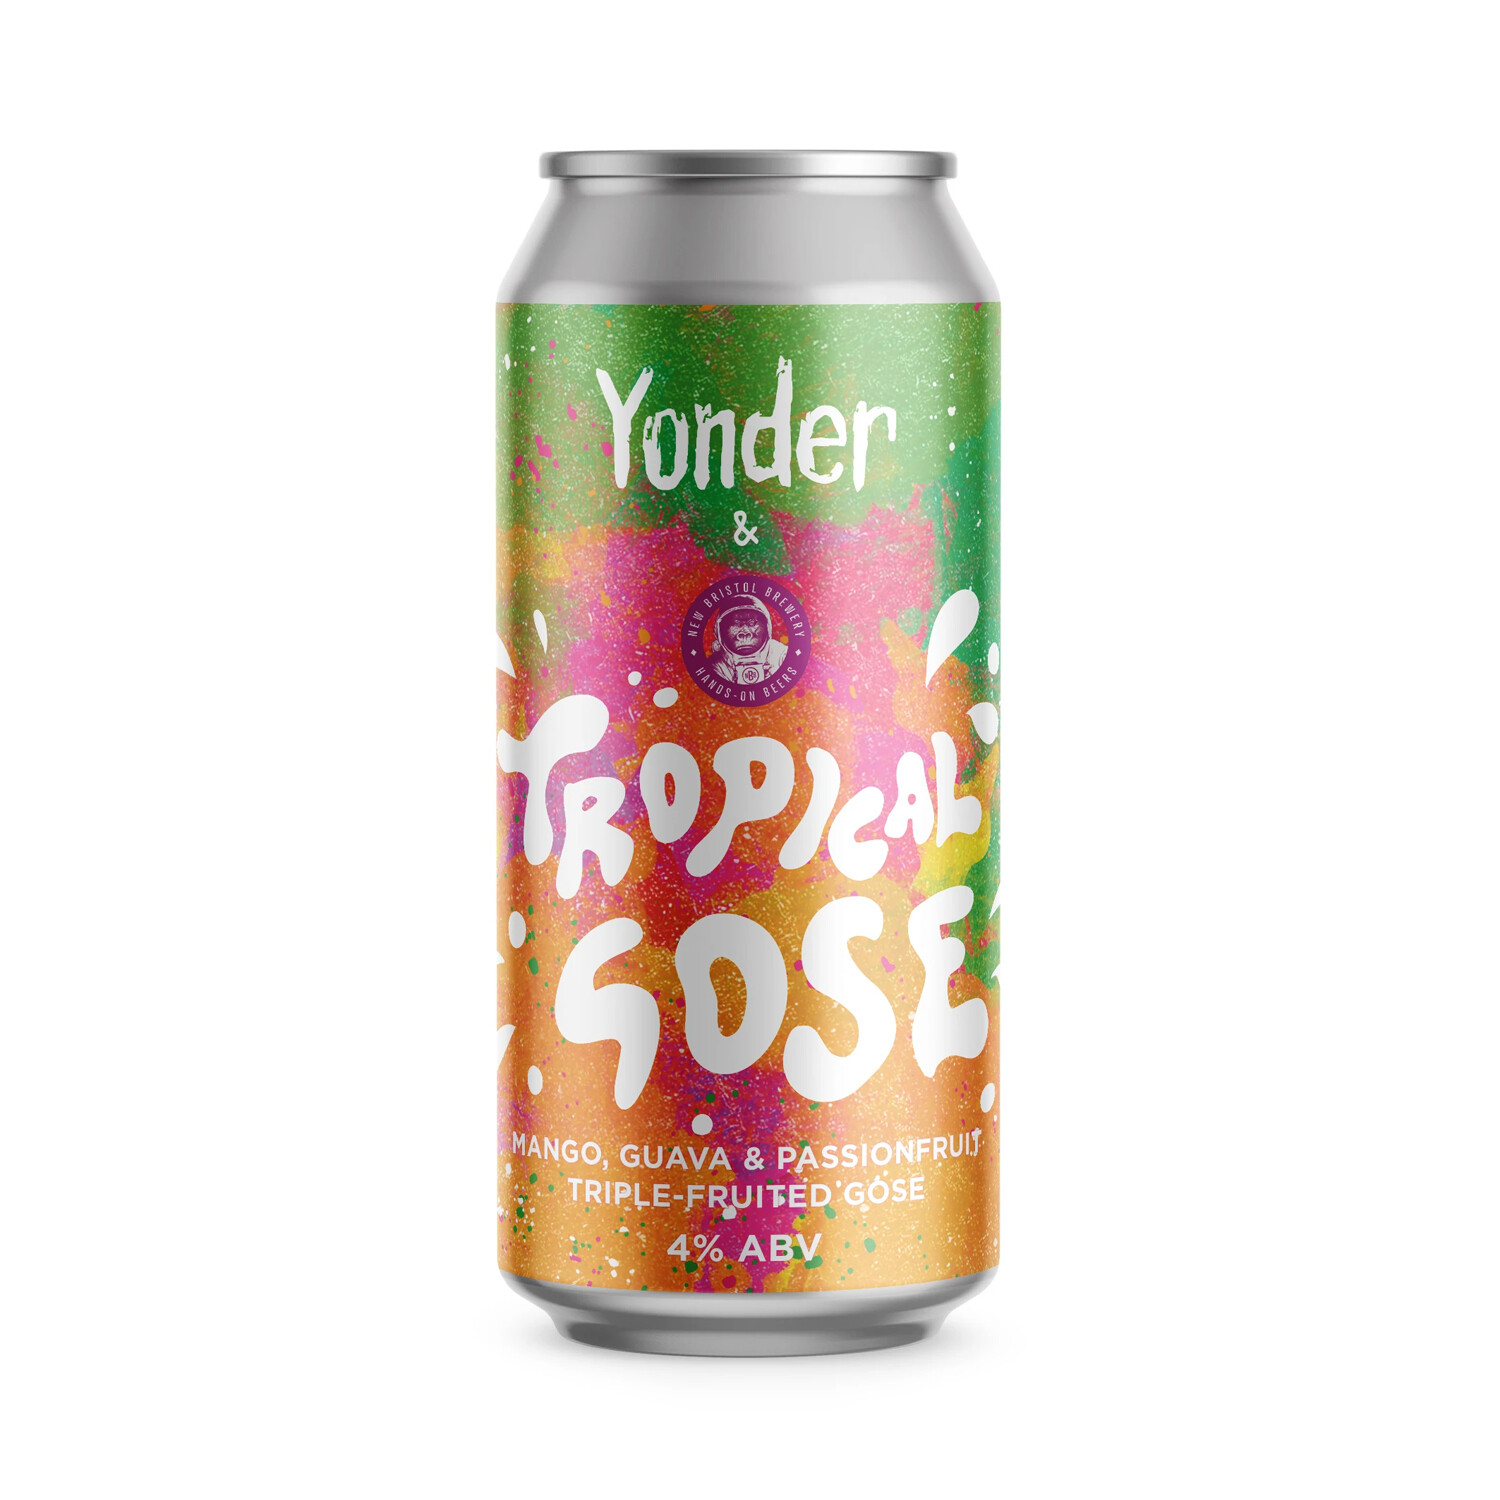 Yonder x New Bristol Tropical Gose Triple Fruited Sour